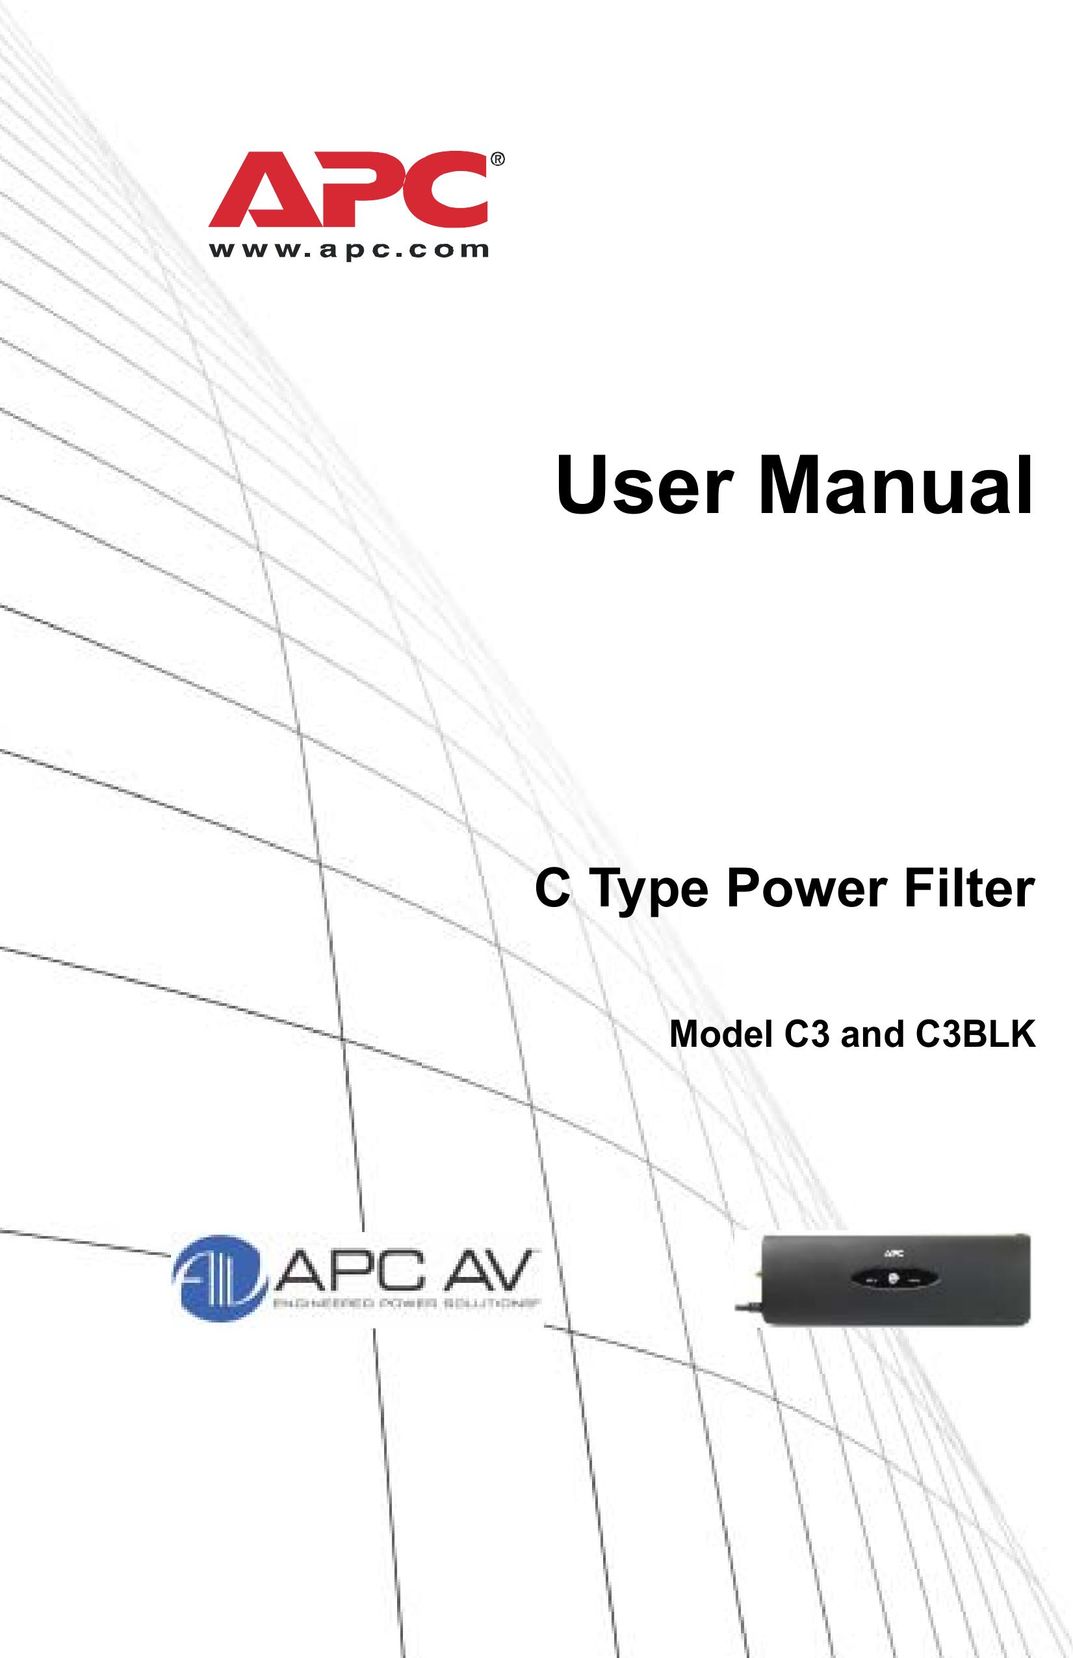 APC Model C3 and C3BLK Surge Protector User Manual